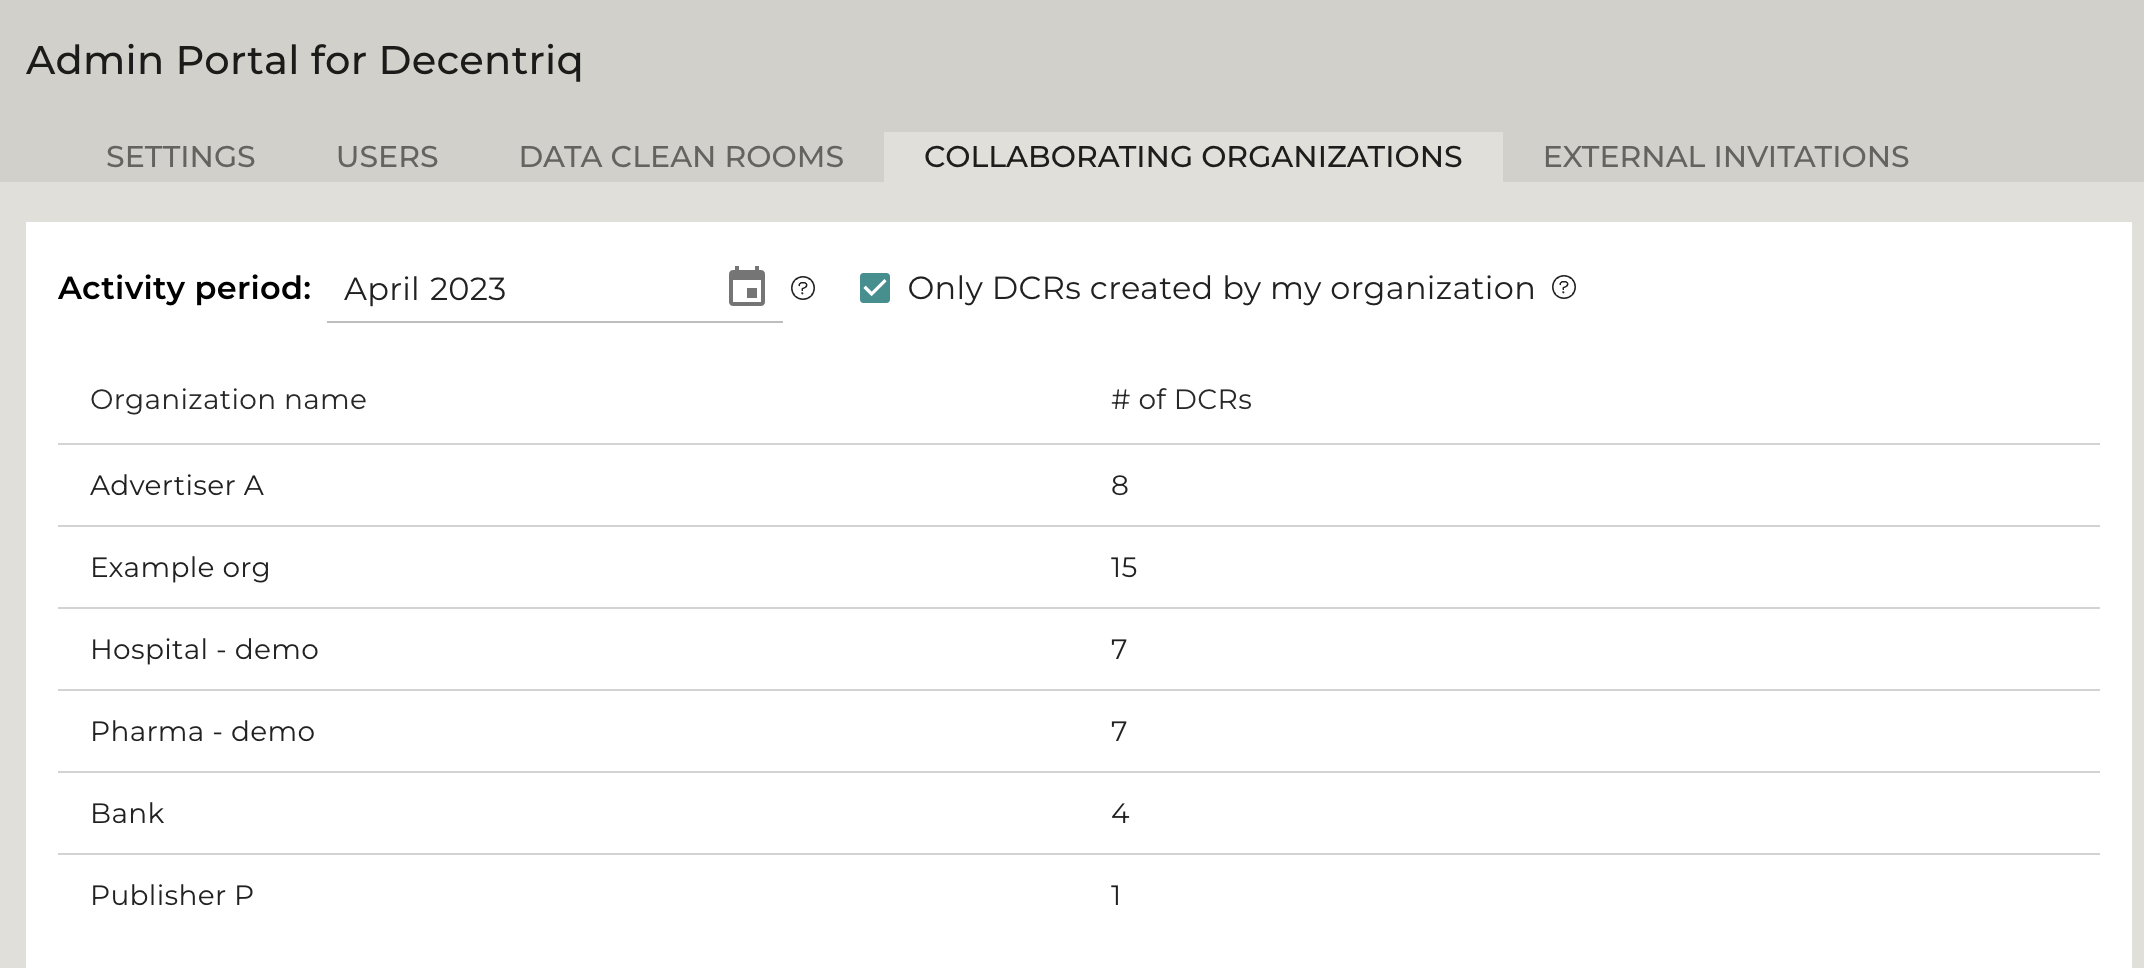 Collaborating organizations tab